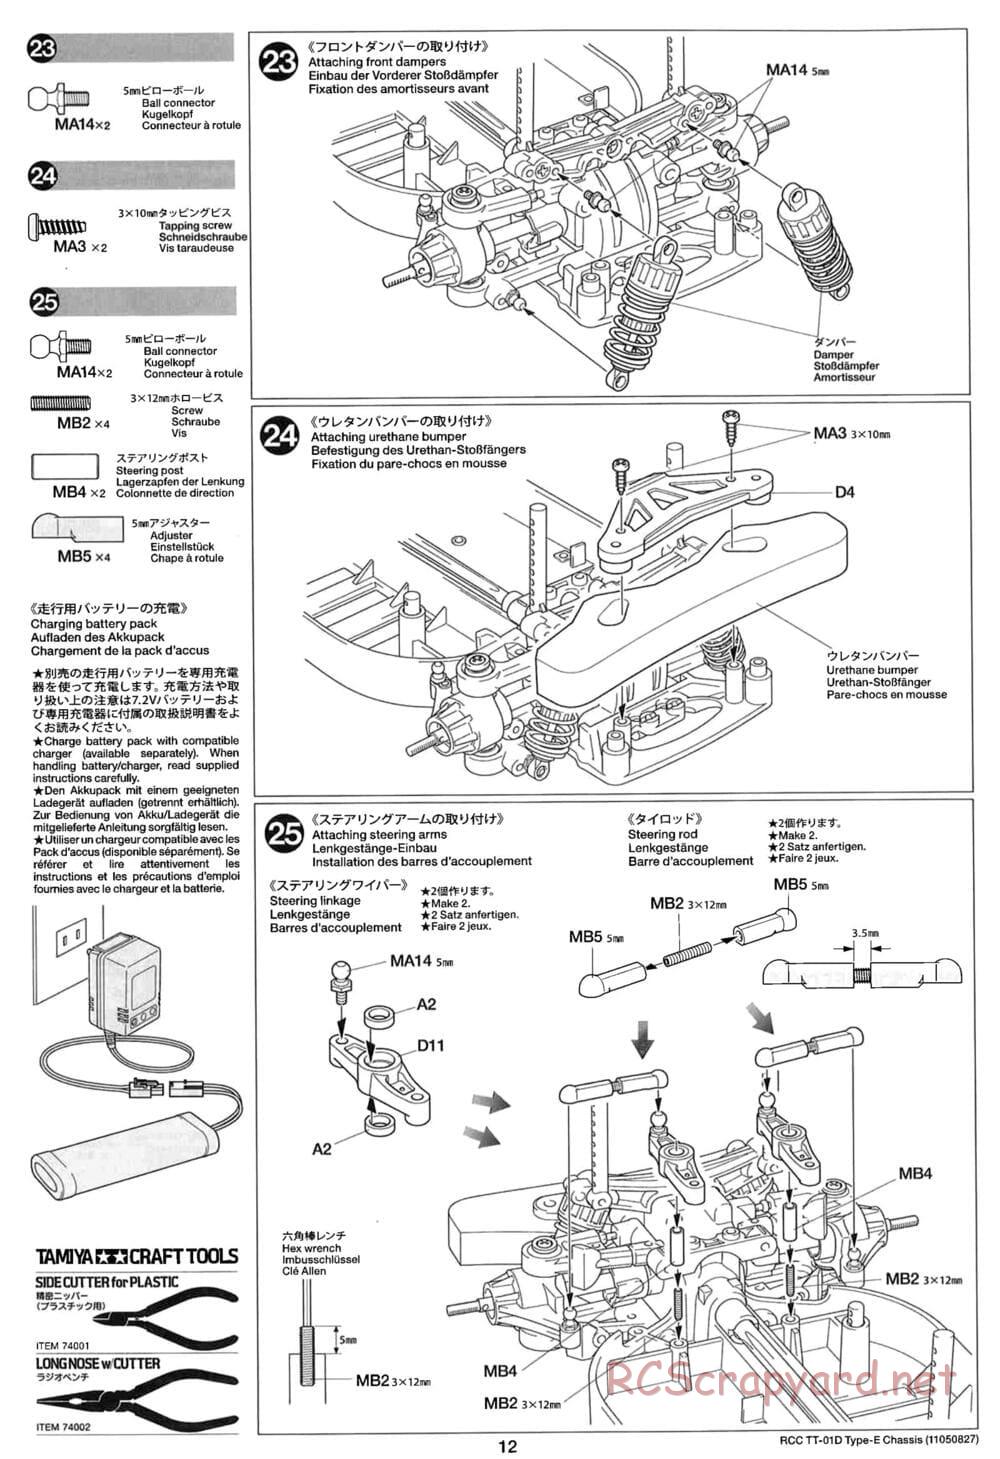 Tamiya - TT-01D Type-E (TT-01ED) - Drift Spec Chassis - Manual - Page 12